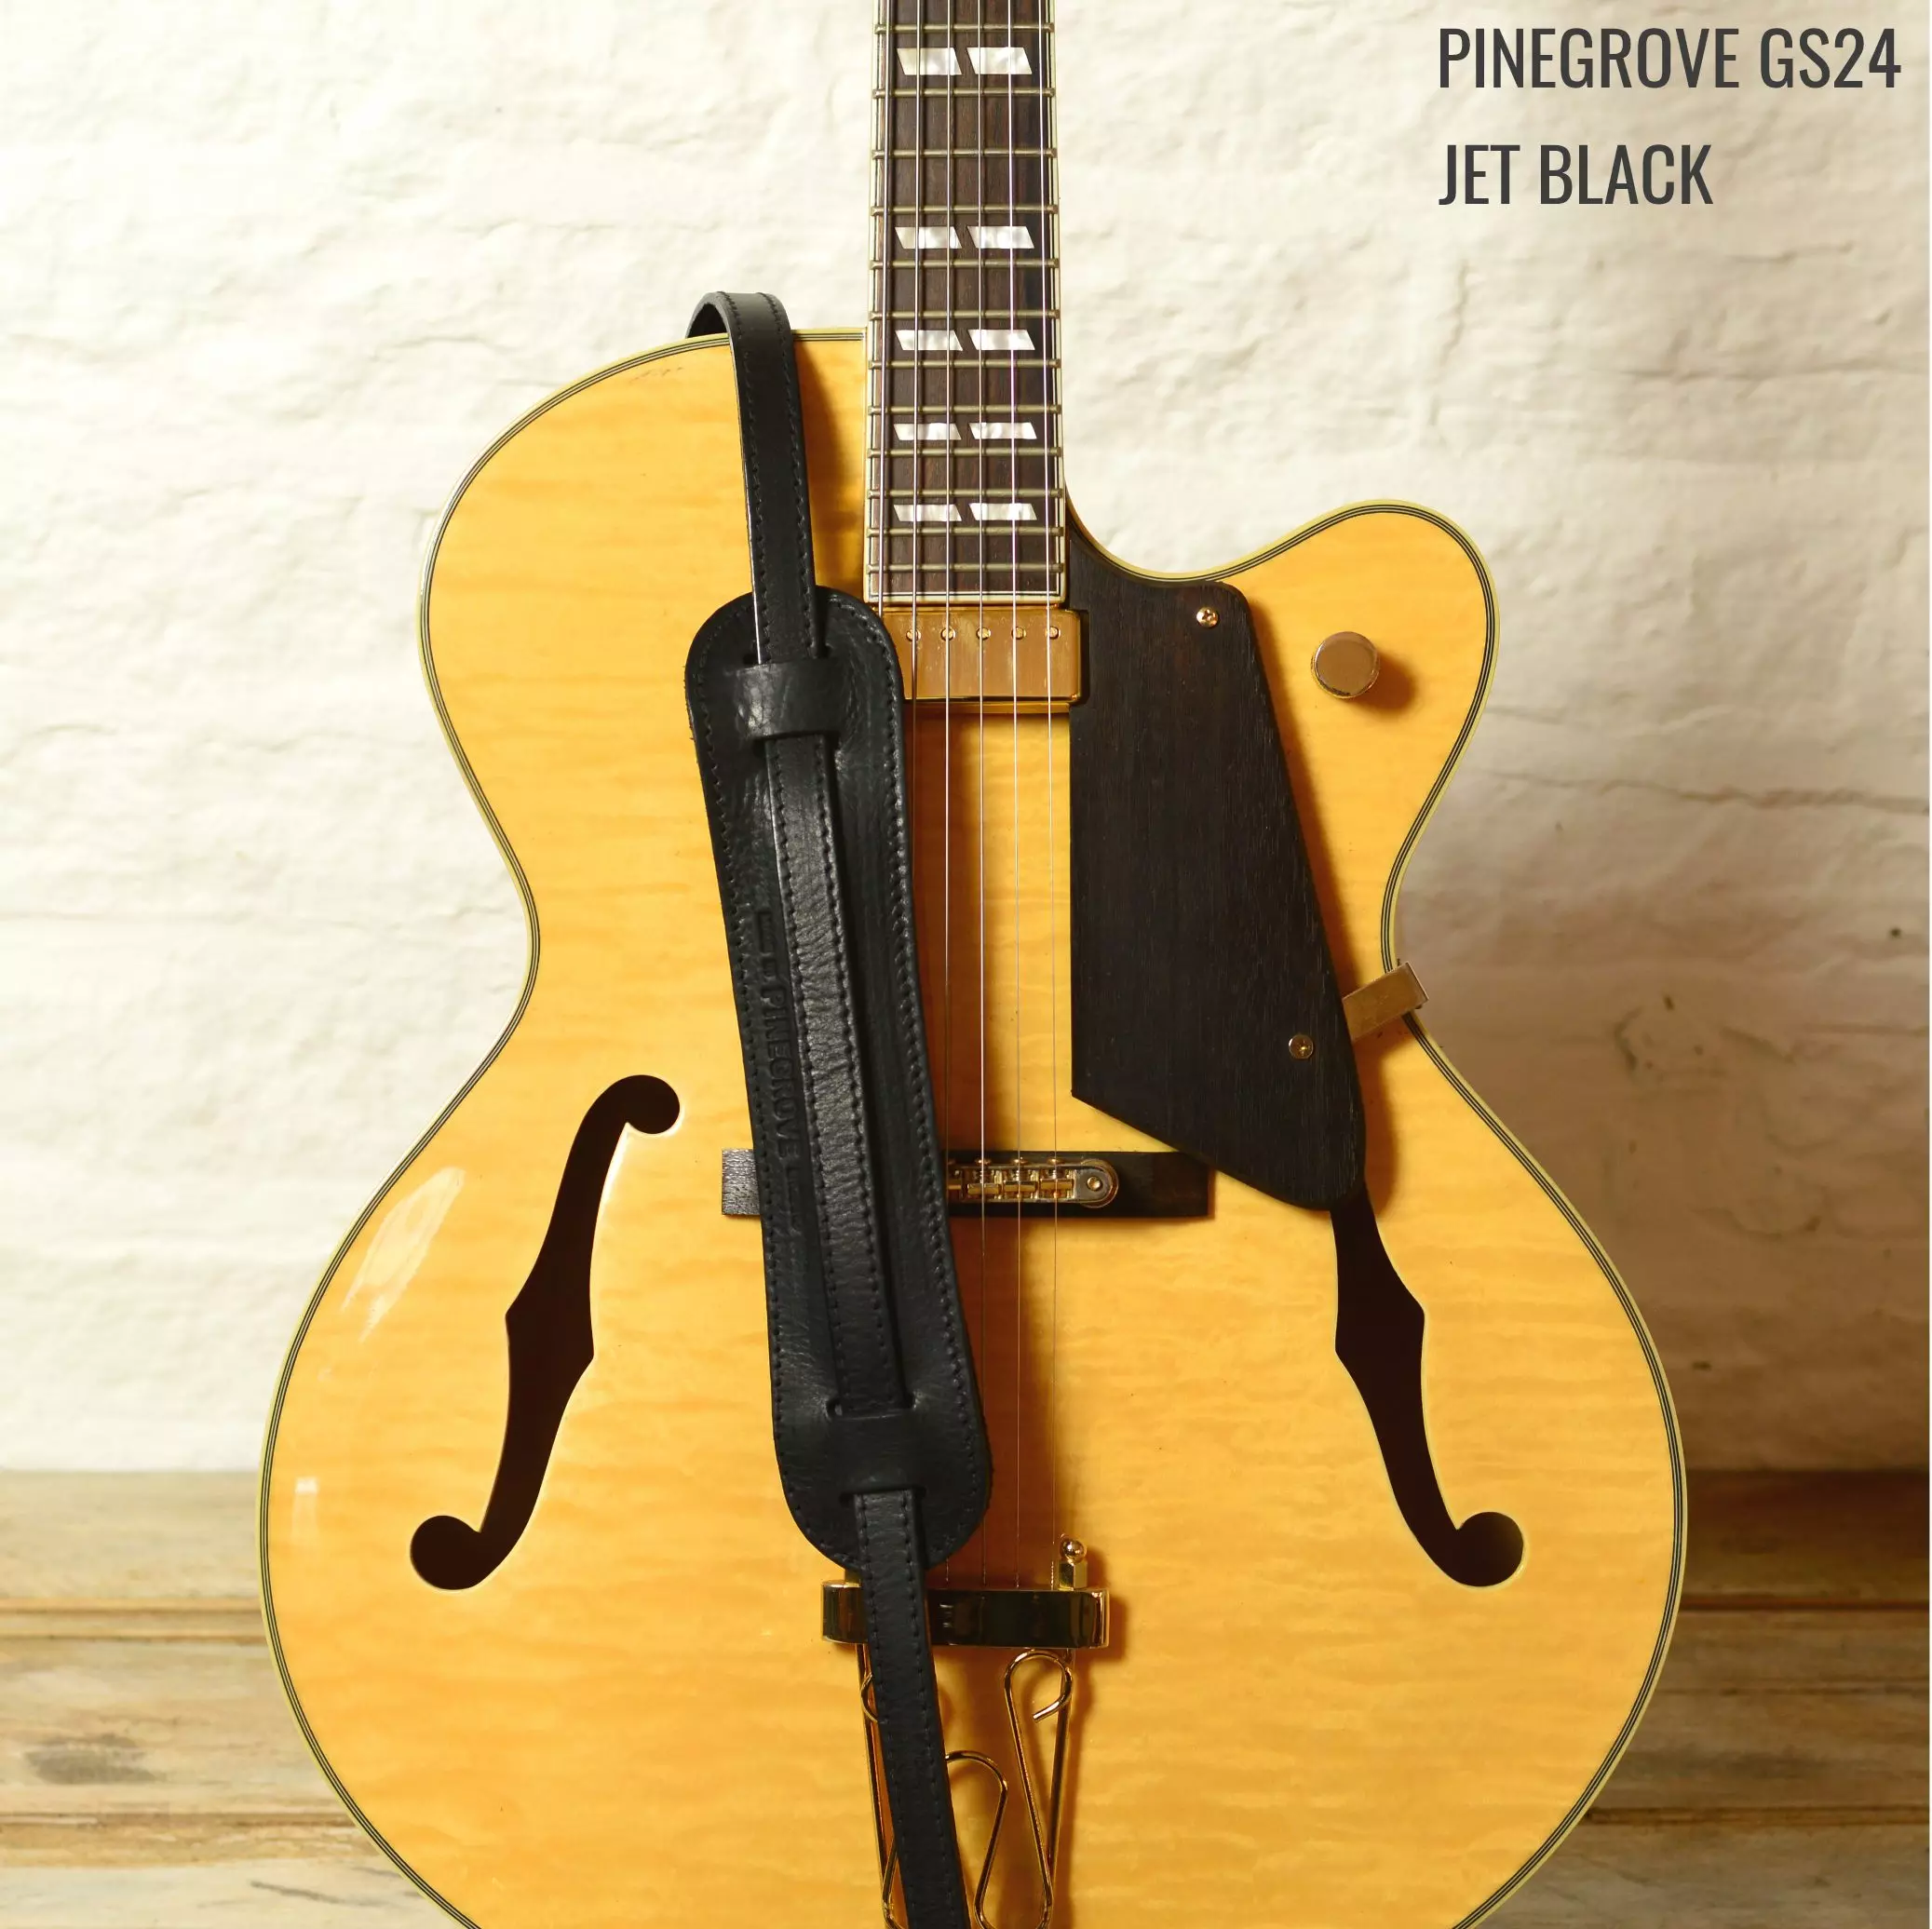 GS24 black vintage guitar strap Pinegrove anno.jpg